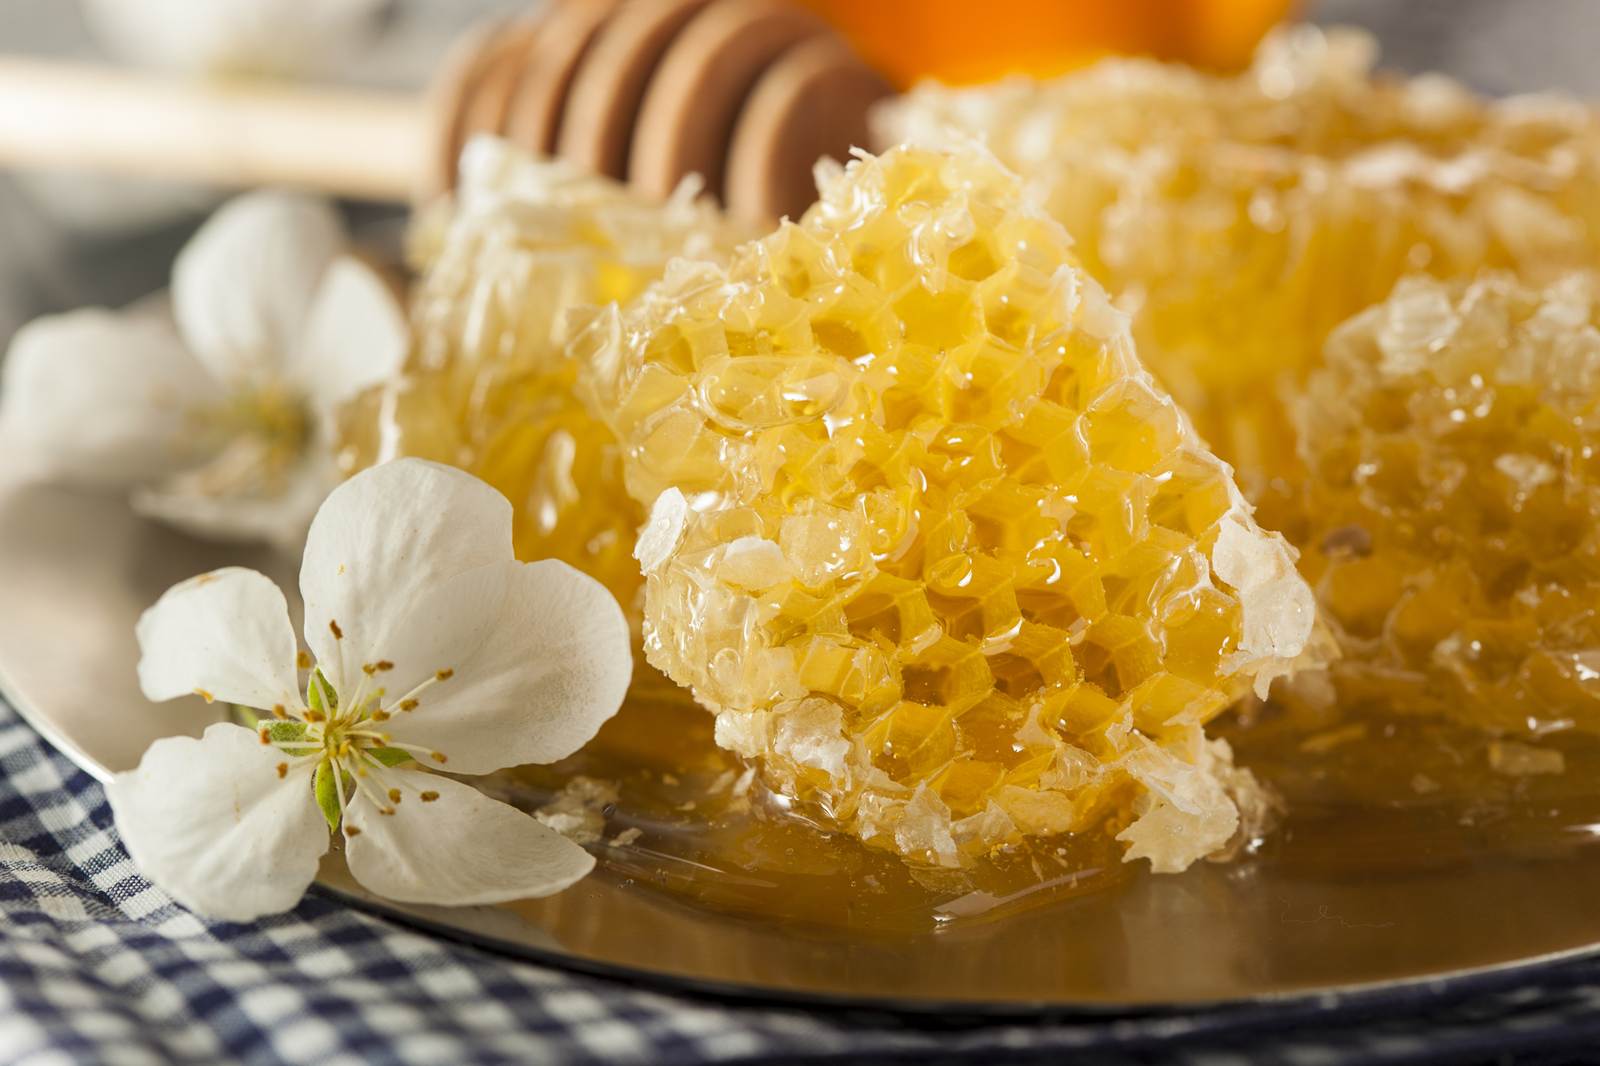 miele naturale biologico